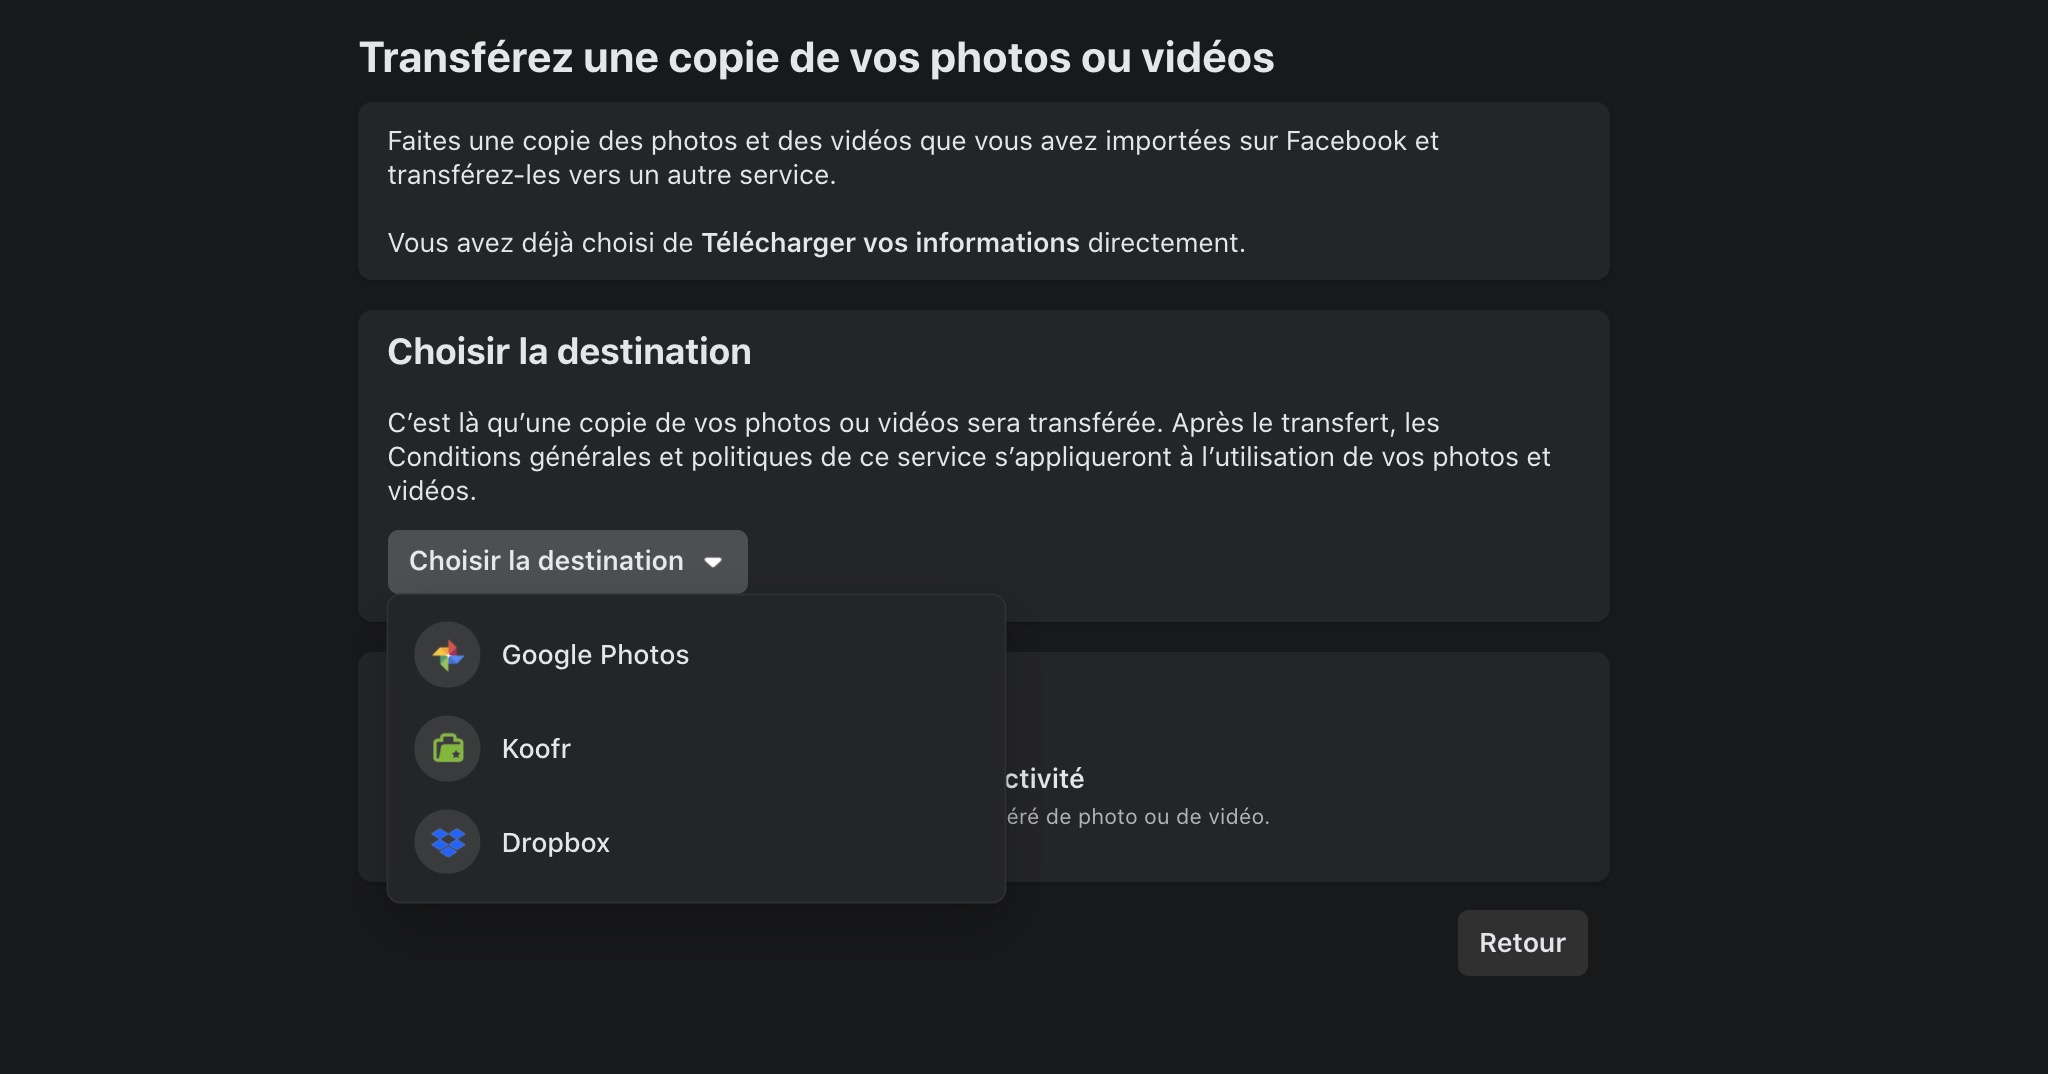 facebook facilite transfert photos et videos vers dropbox et koofr